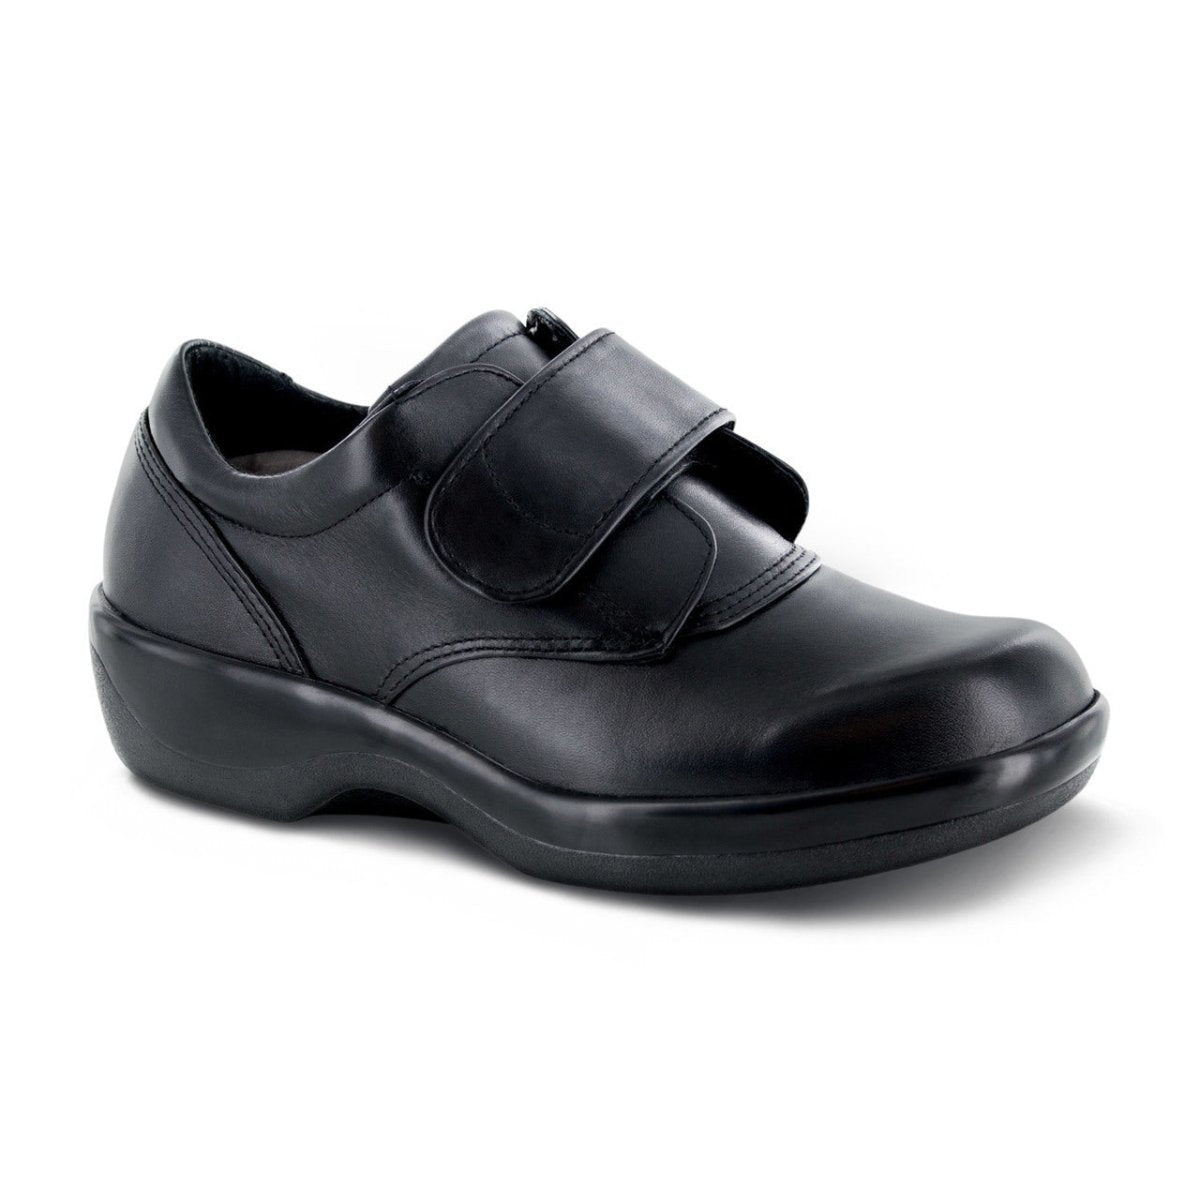 APEX B3000W AMBULATOR BIOMECHANICAL WOMEN'S SINGLE STRAP CASUAL SHOE IN BLACK - TLW Shoes